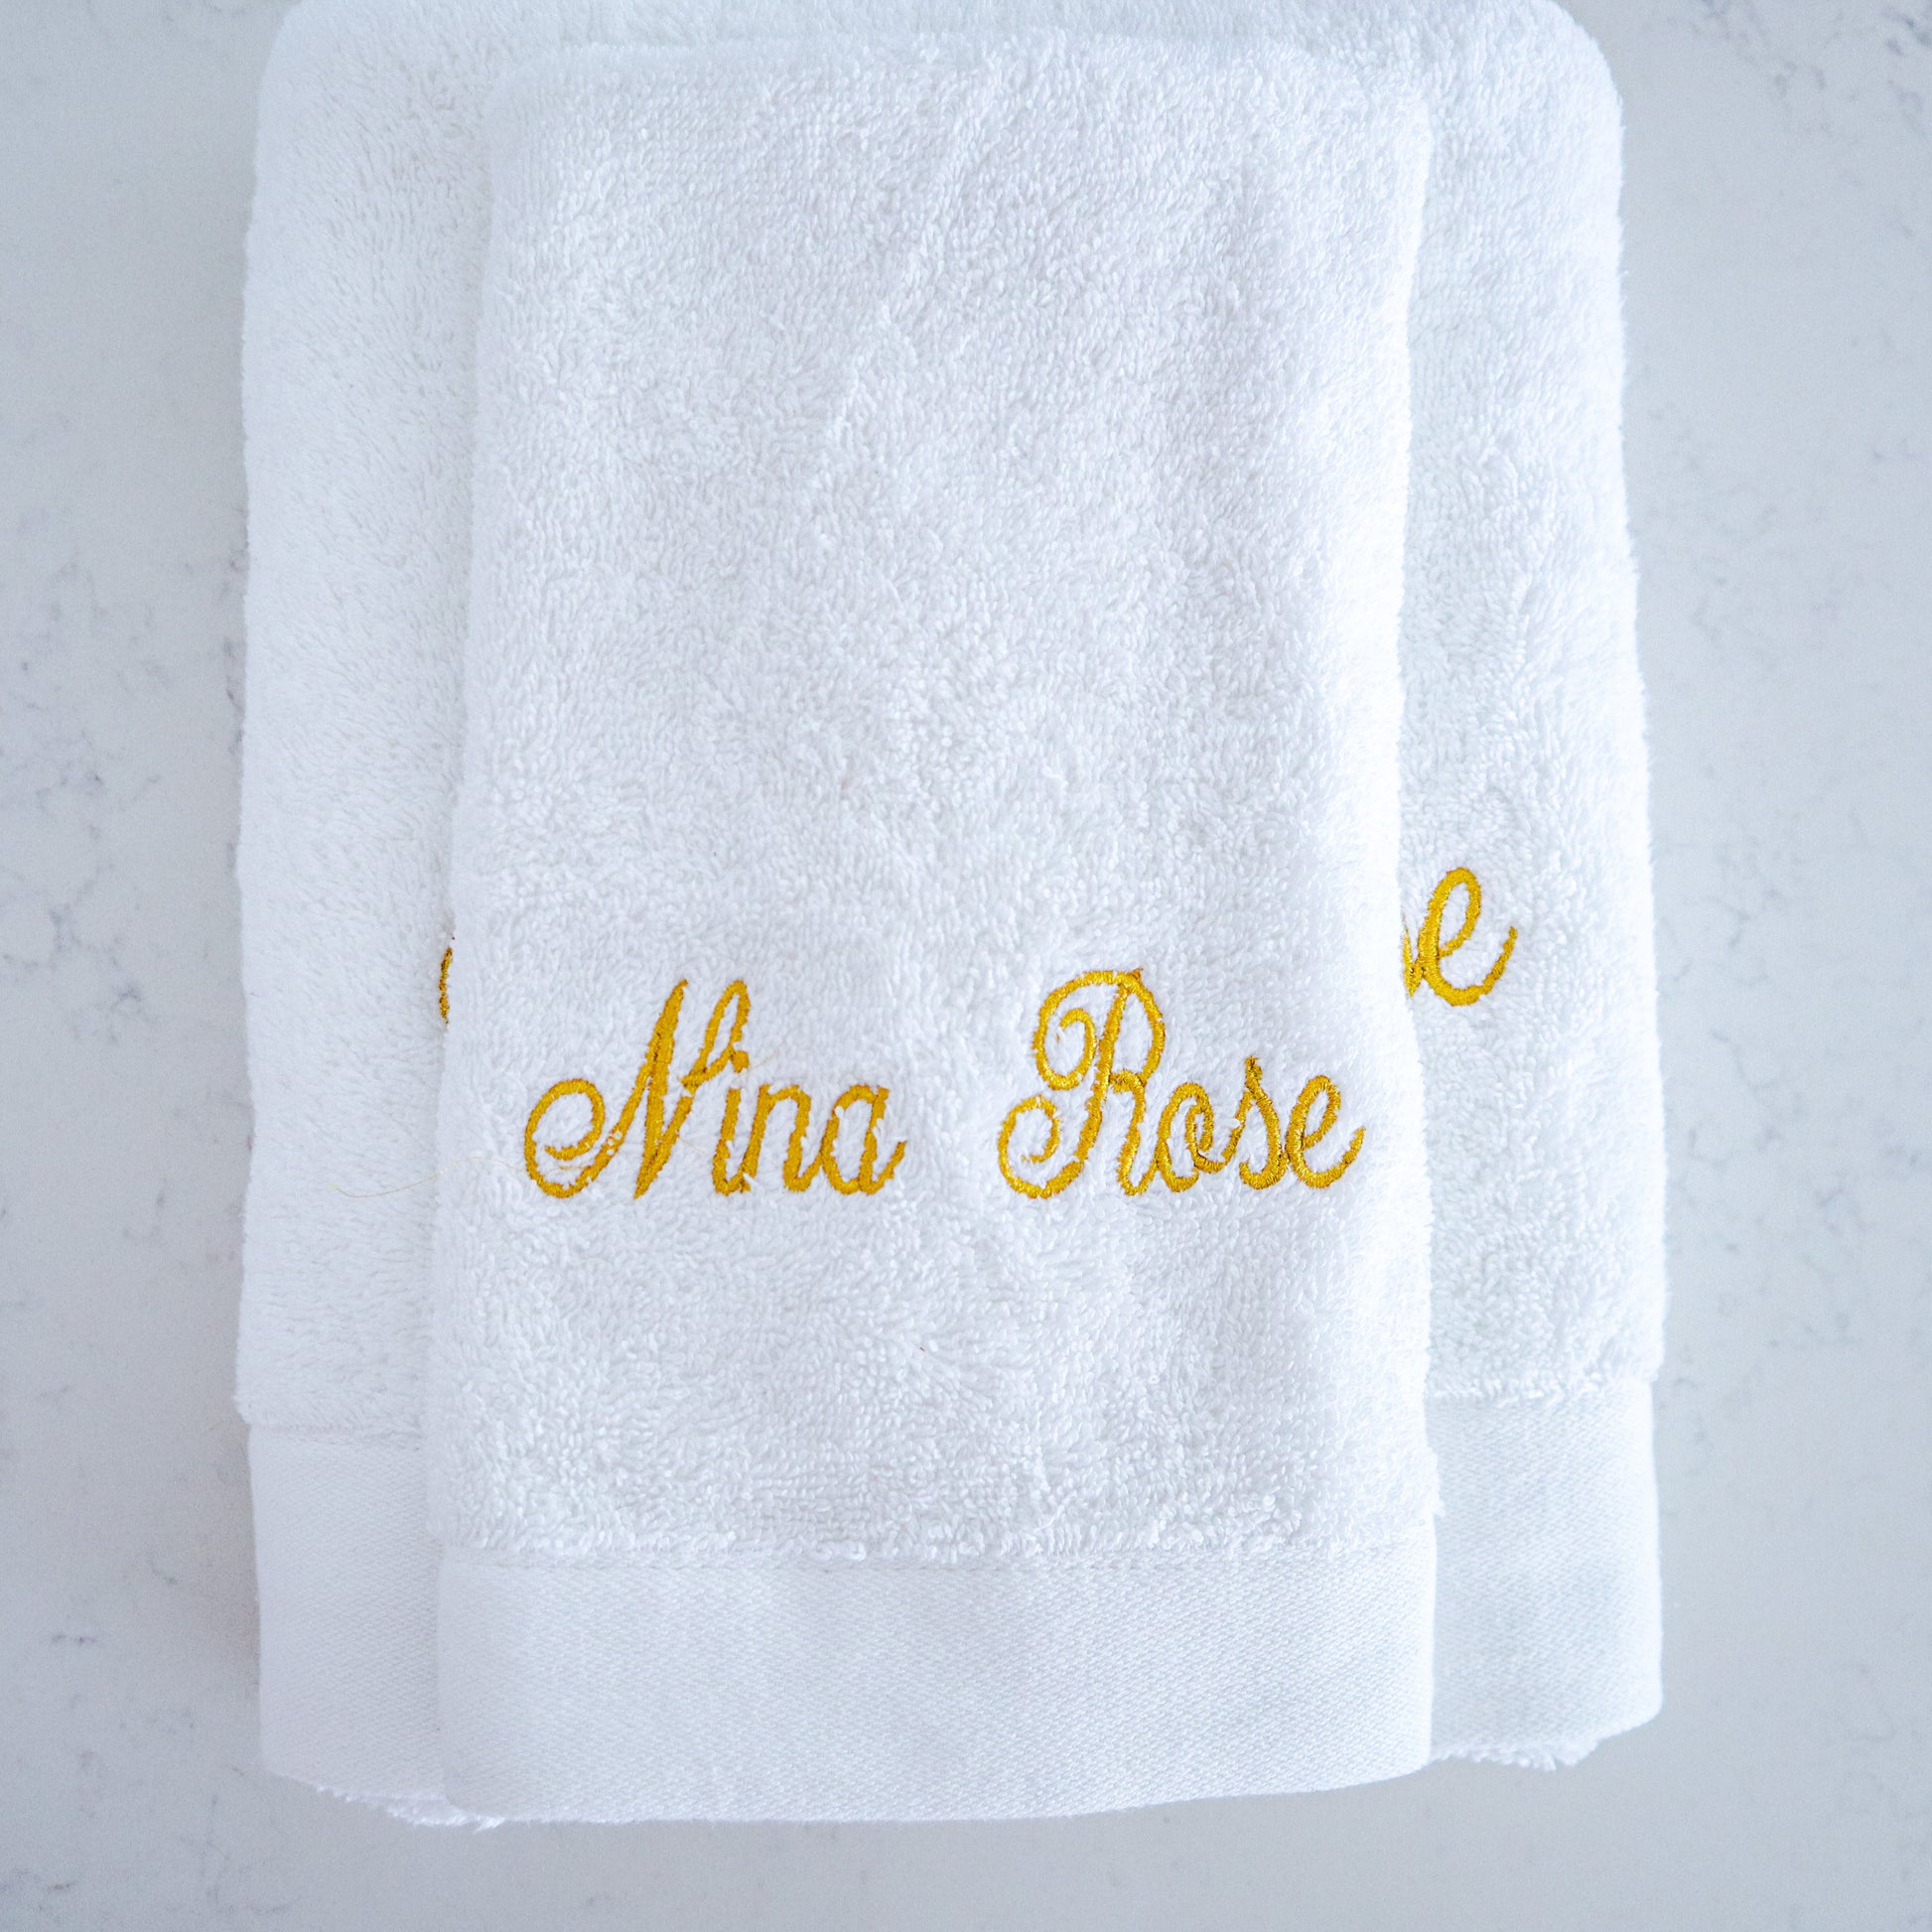 Towel Set - Nina Rose (Mettalic Gold)- Includes 1 x Bath Towel  1 x Hand Towel